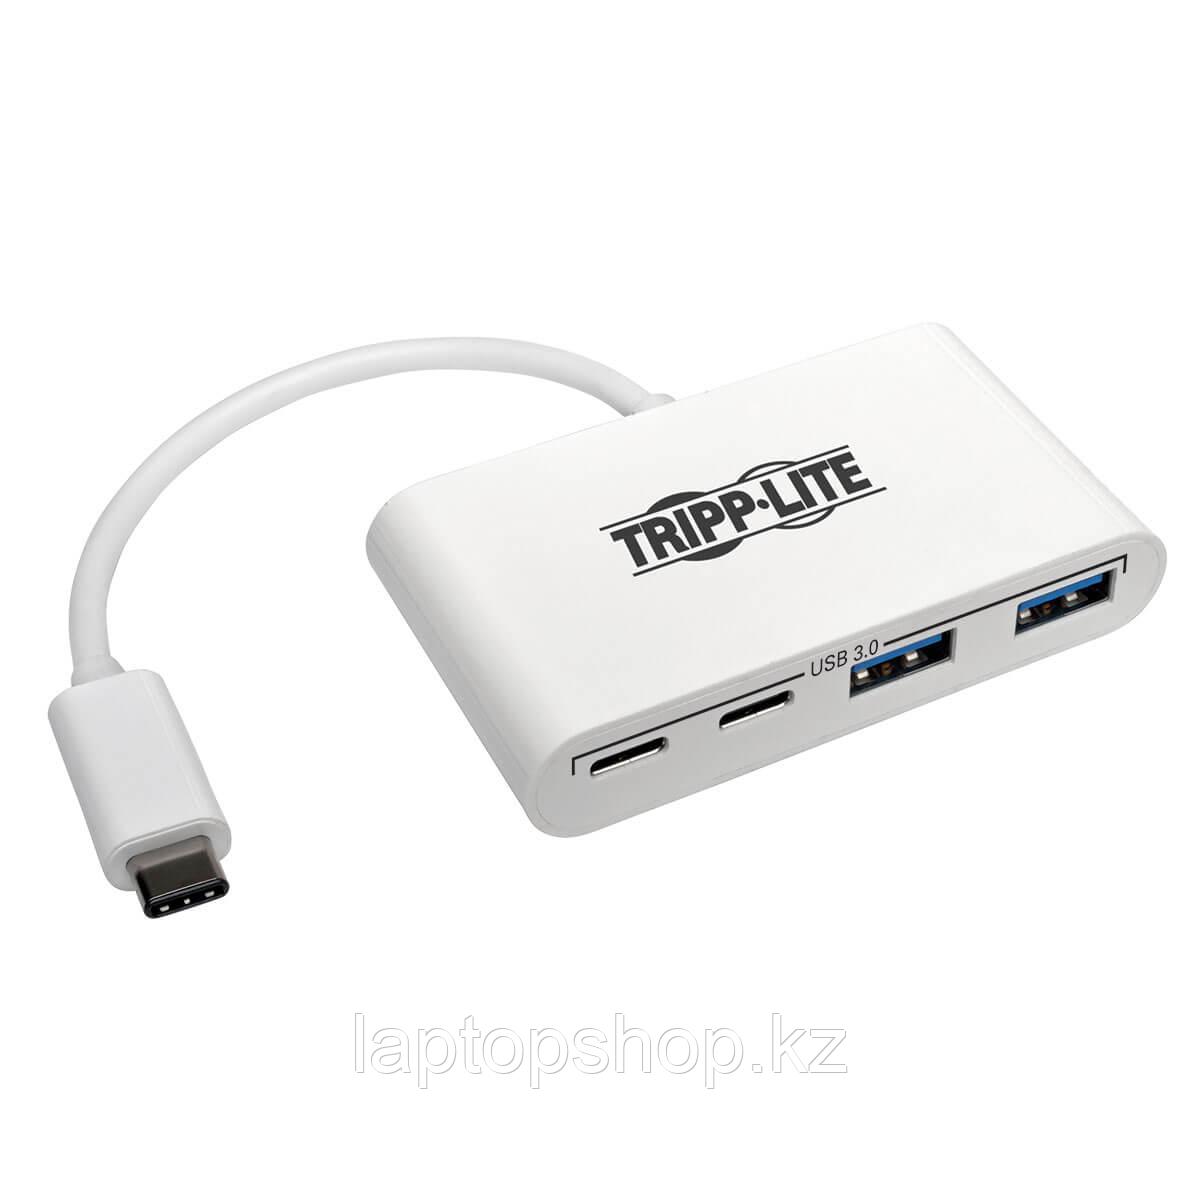 Расширитель портов USB HUB TrippLite 4-Port USB-C Hub